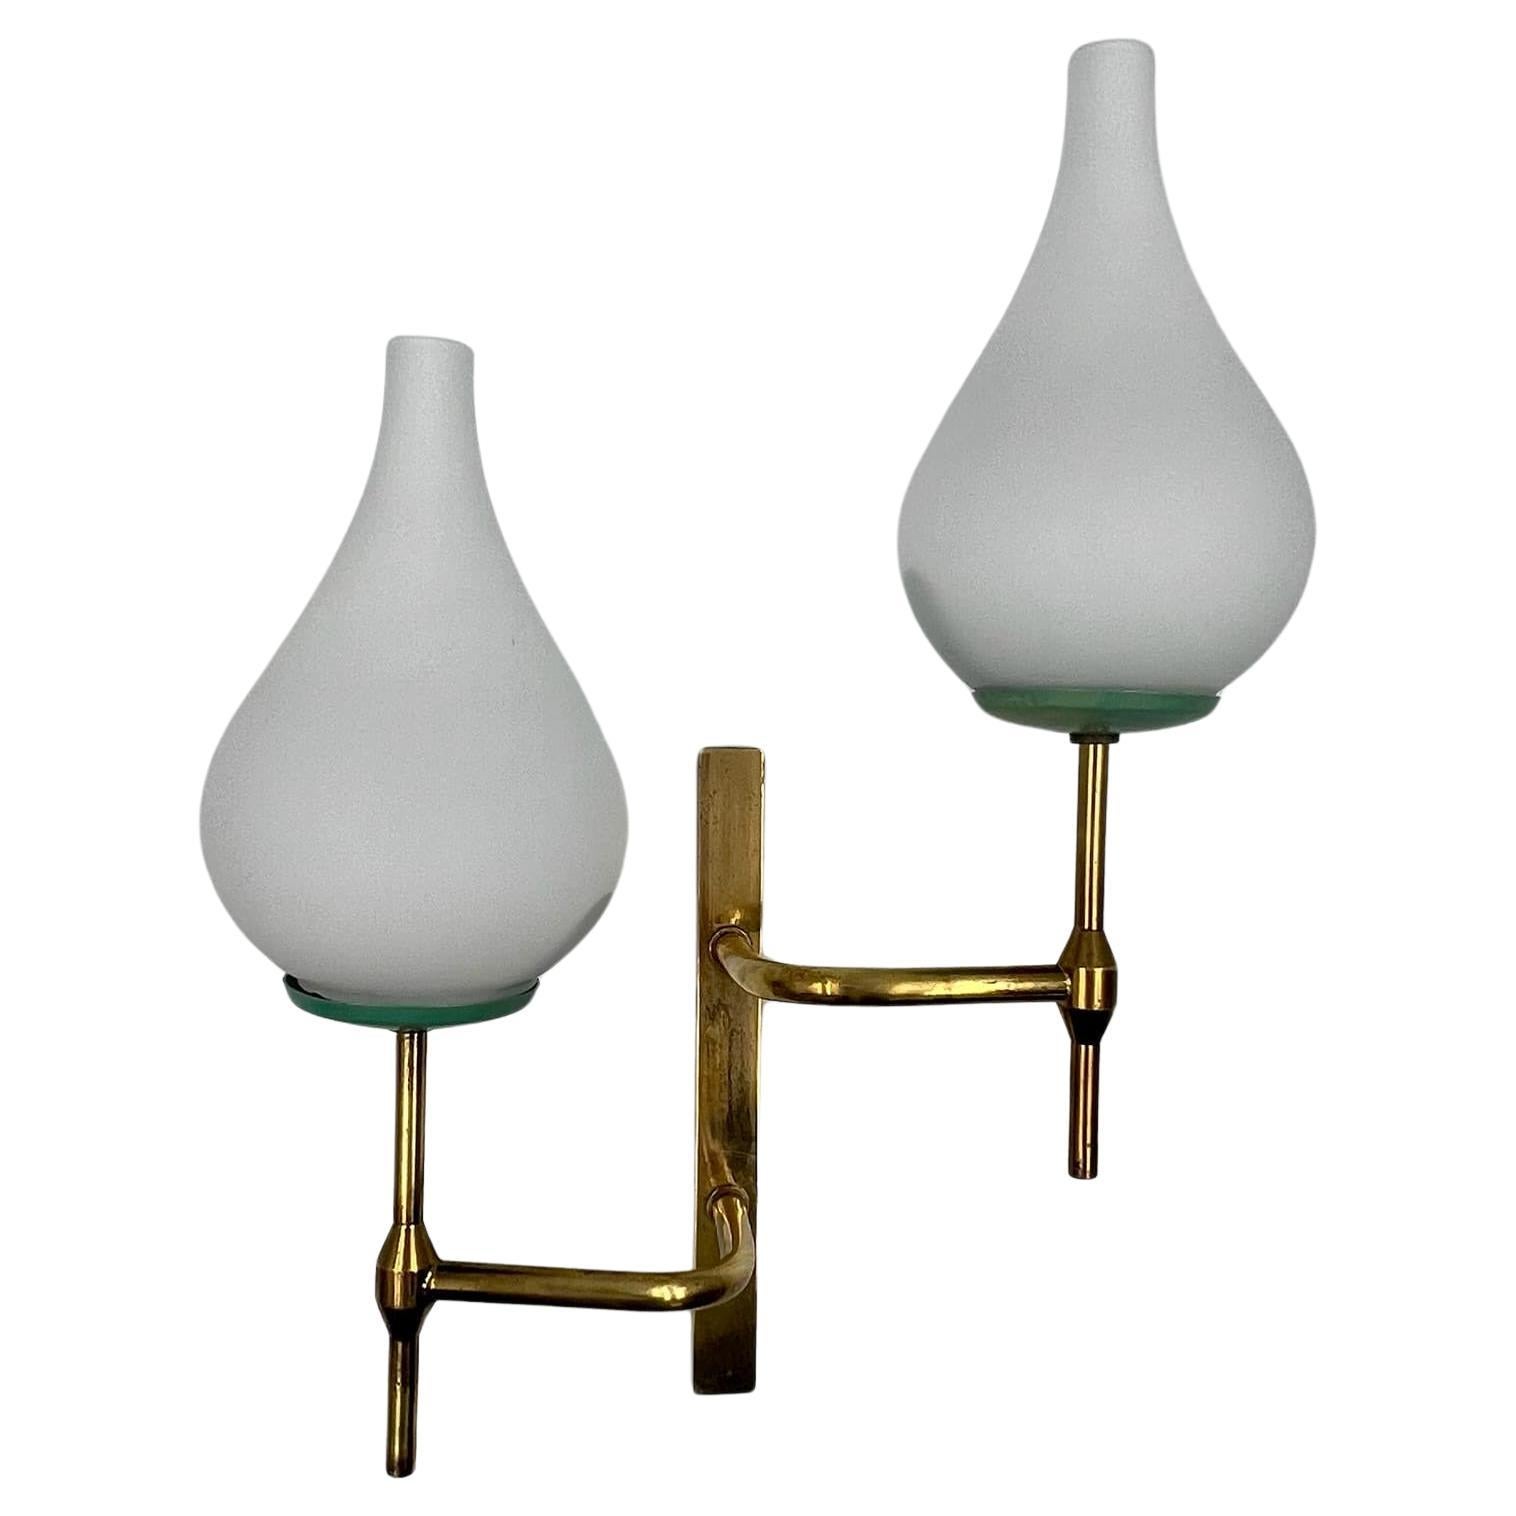 Elegant 50s Lamp Stilnovo style – Vintage Italian Brass and Opaline Glass Sconce For Sale